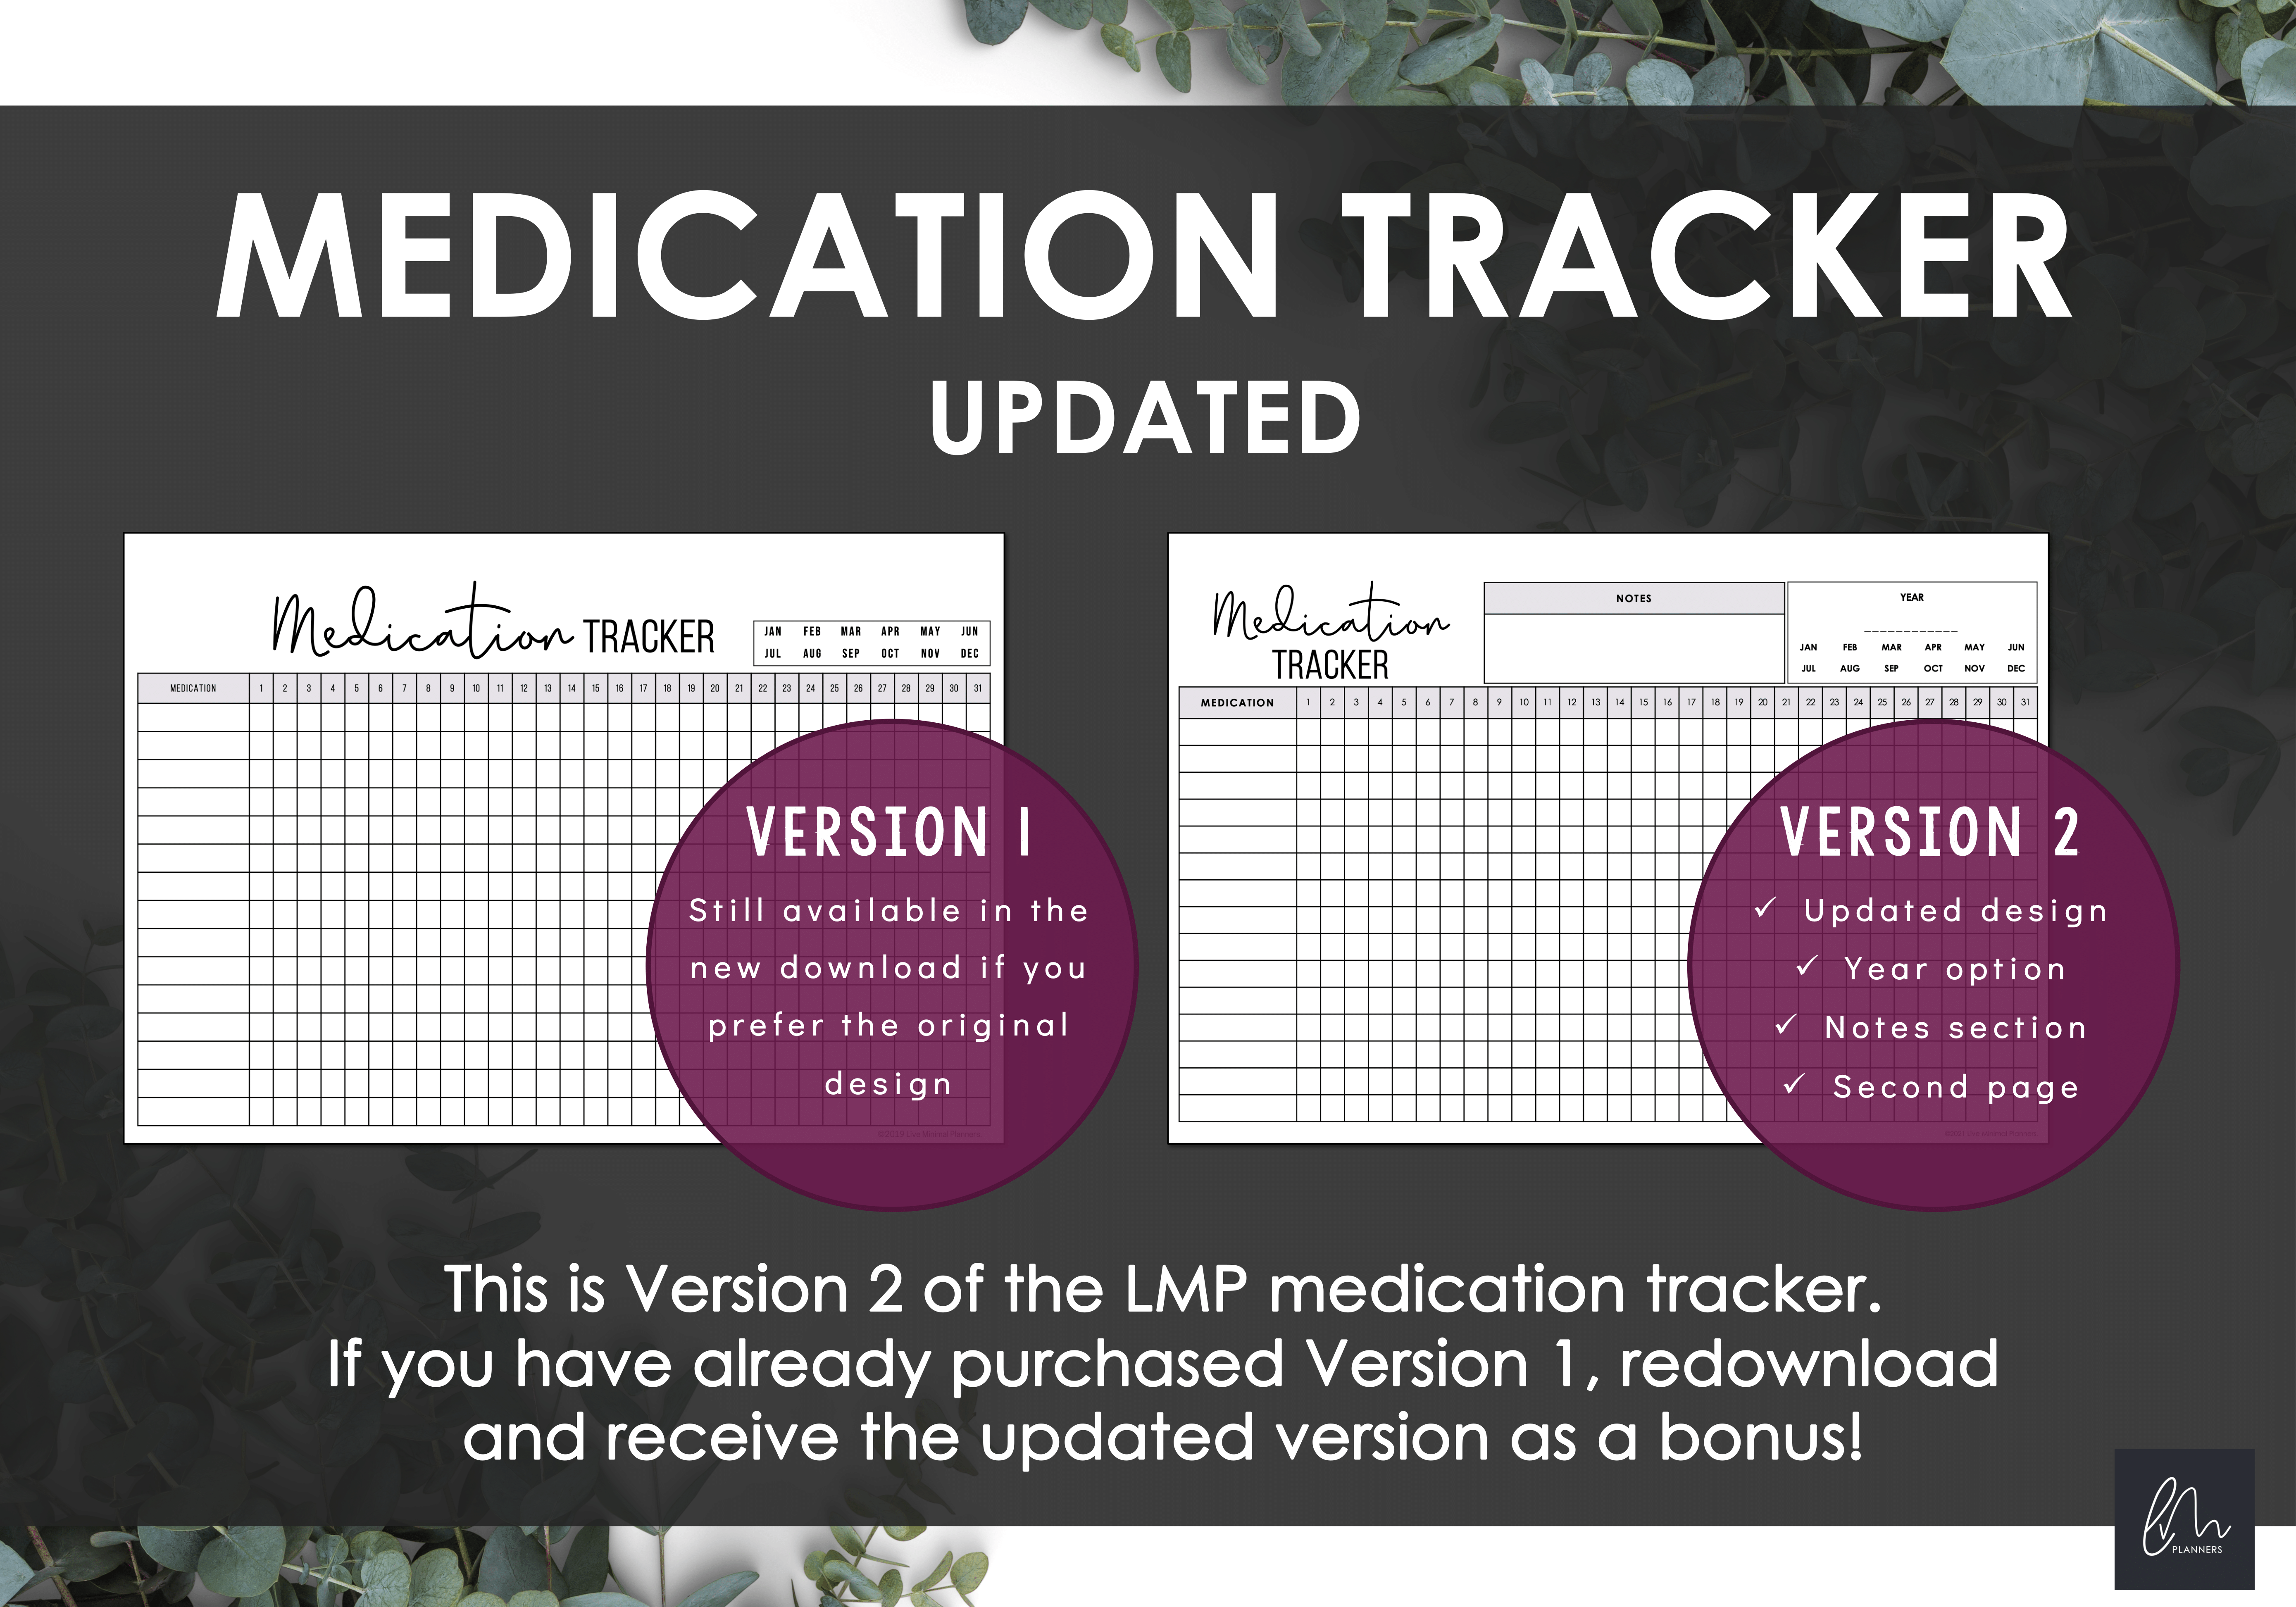 Printable planner, Ivf, Medication tracker